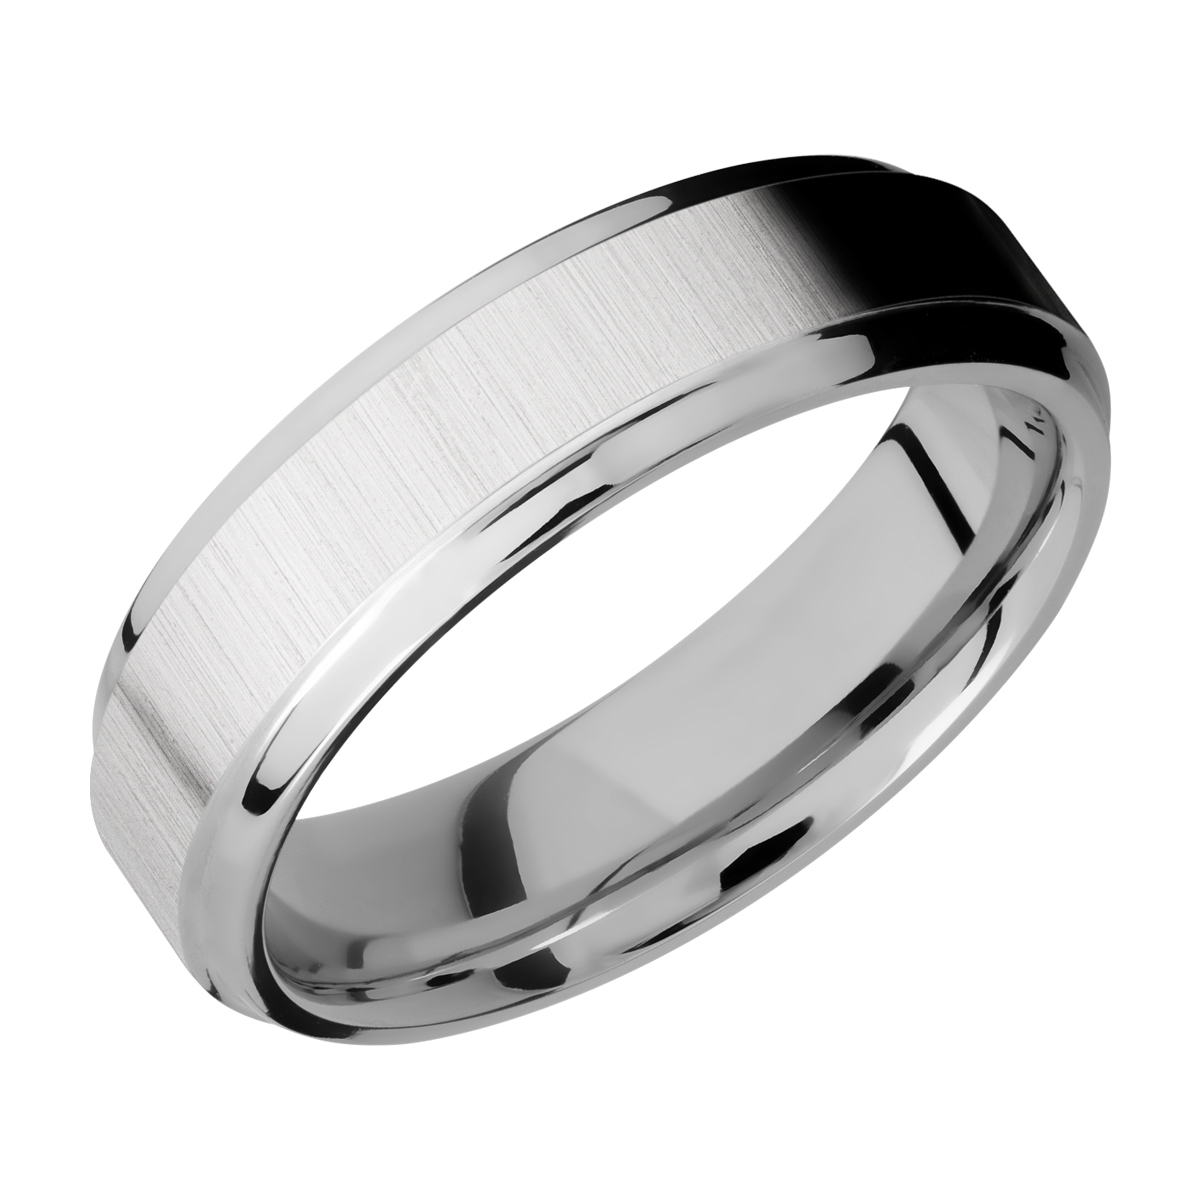 Lashbrook CC6B(S) Cobalt Chrome Wedding Ring or Band